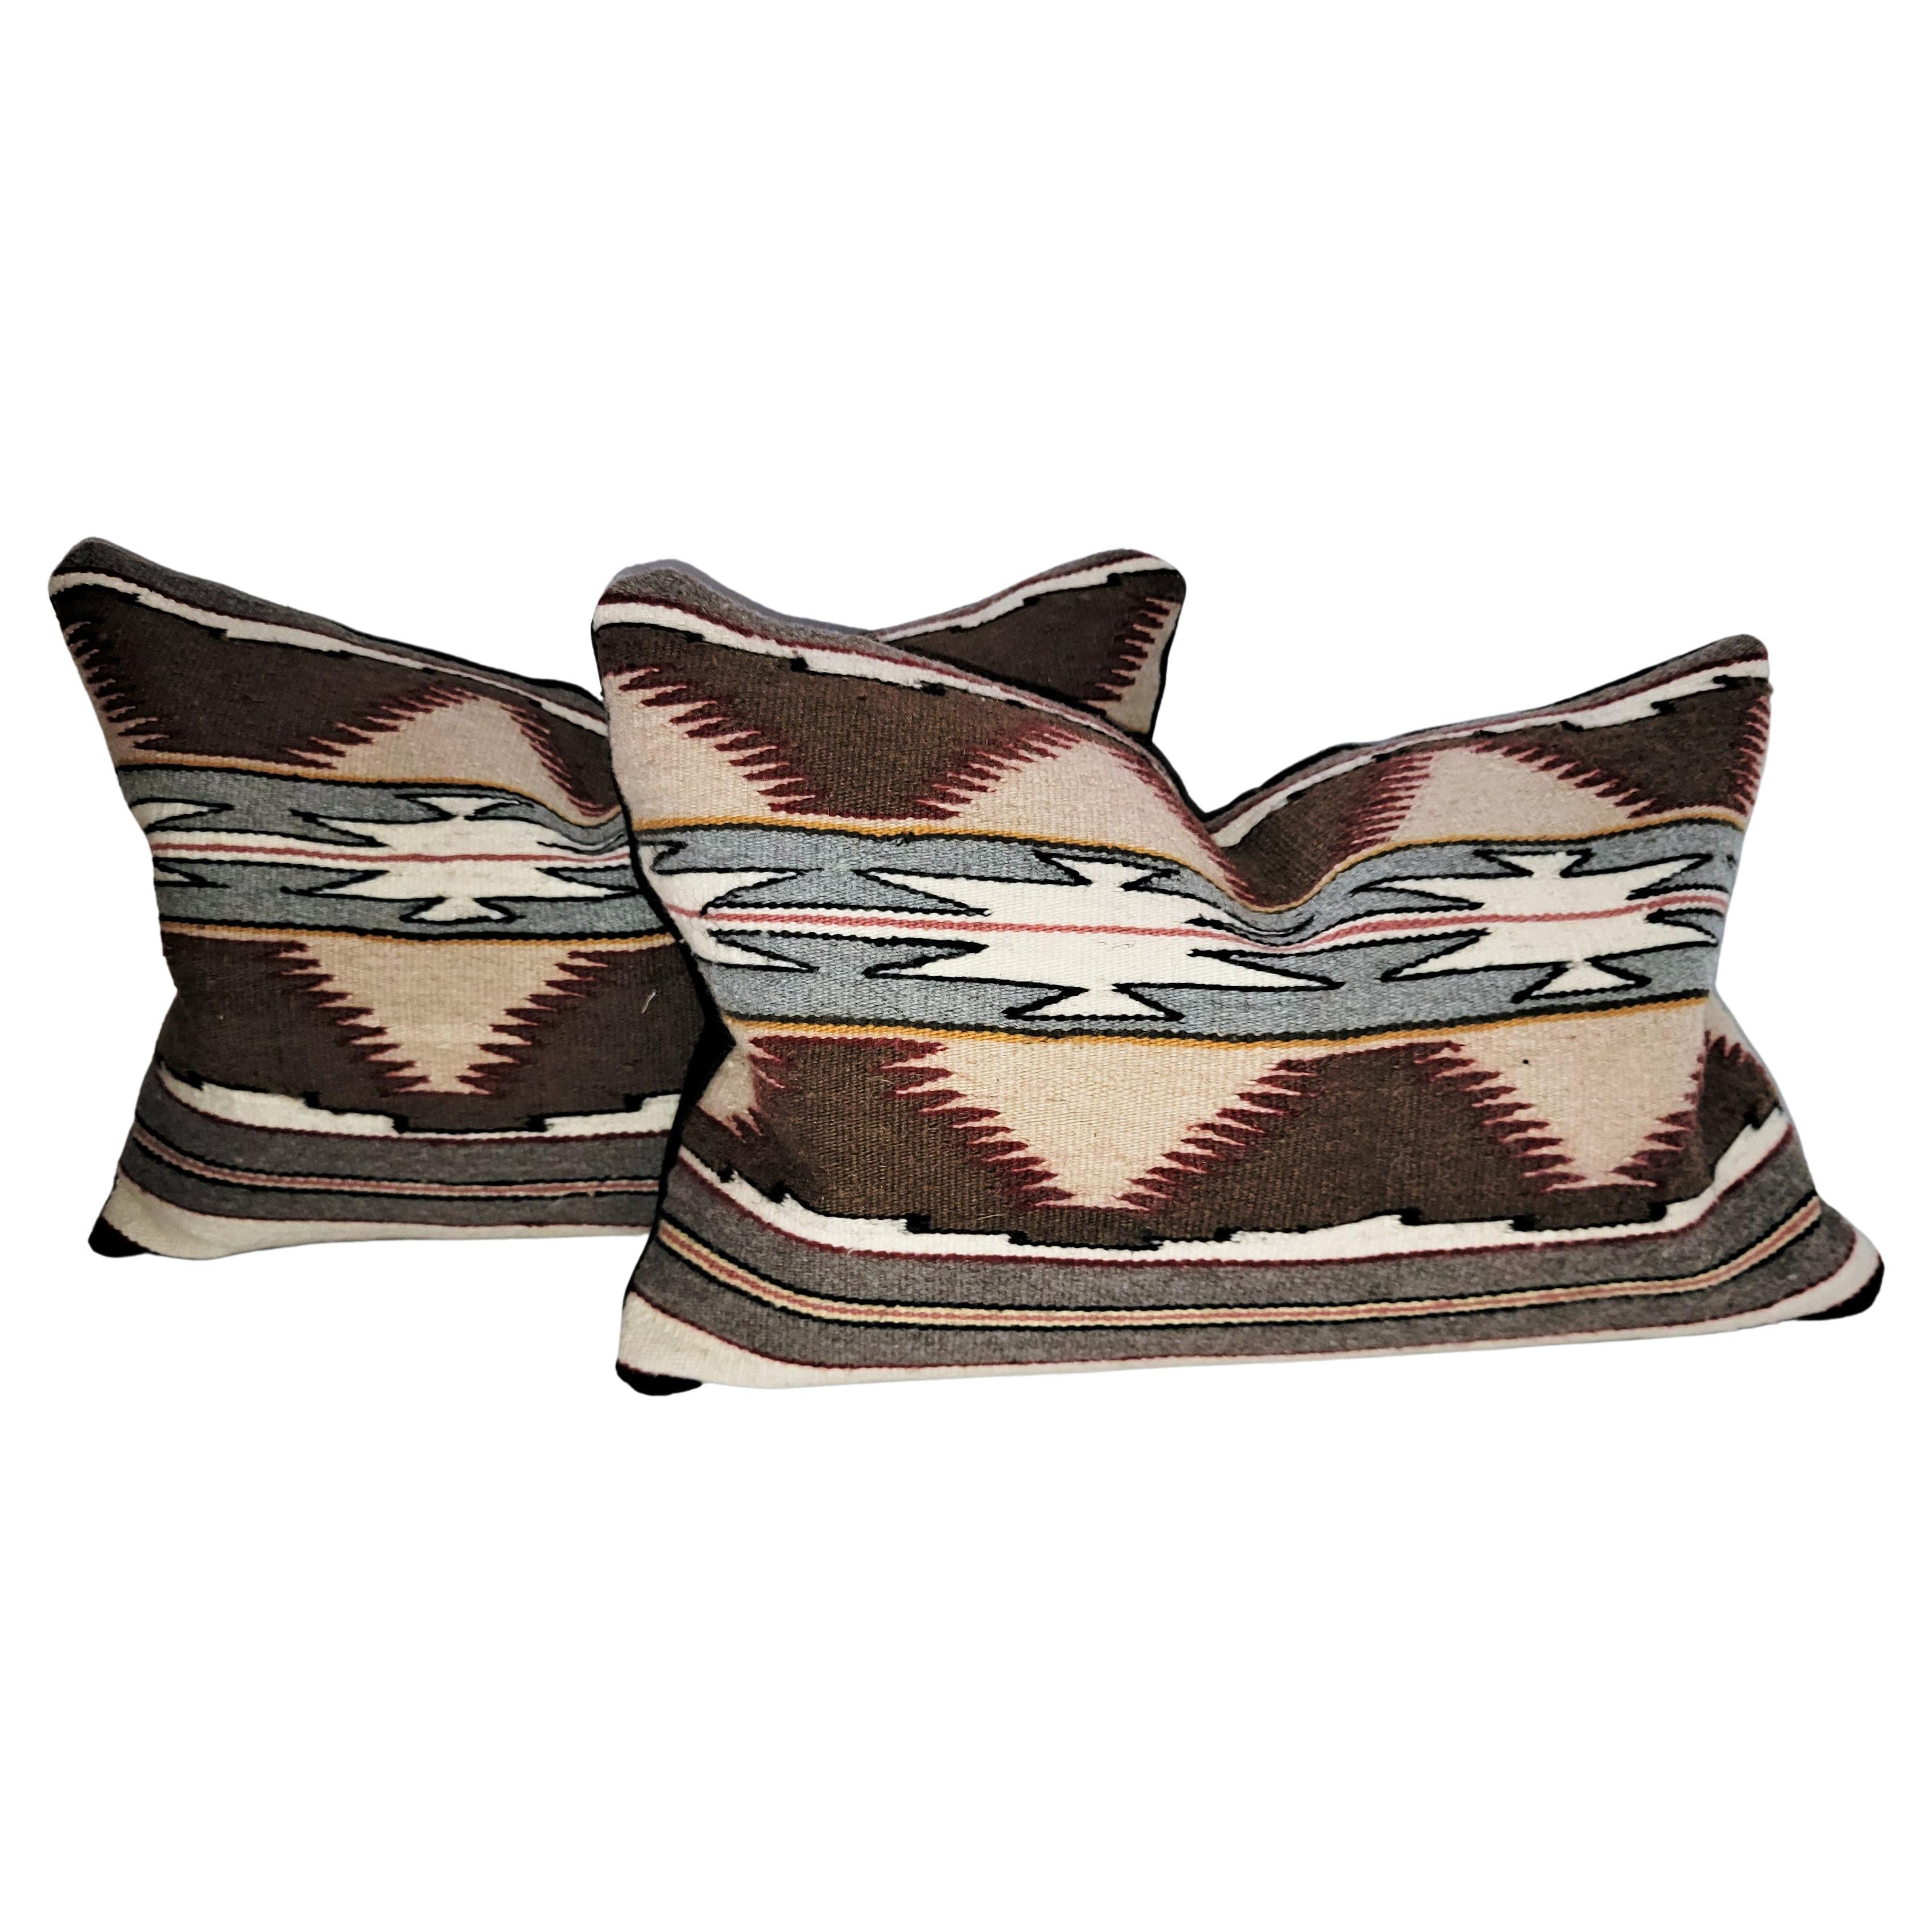 Pair of Indian Weaving Pillows